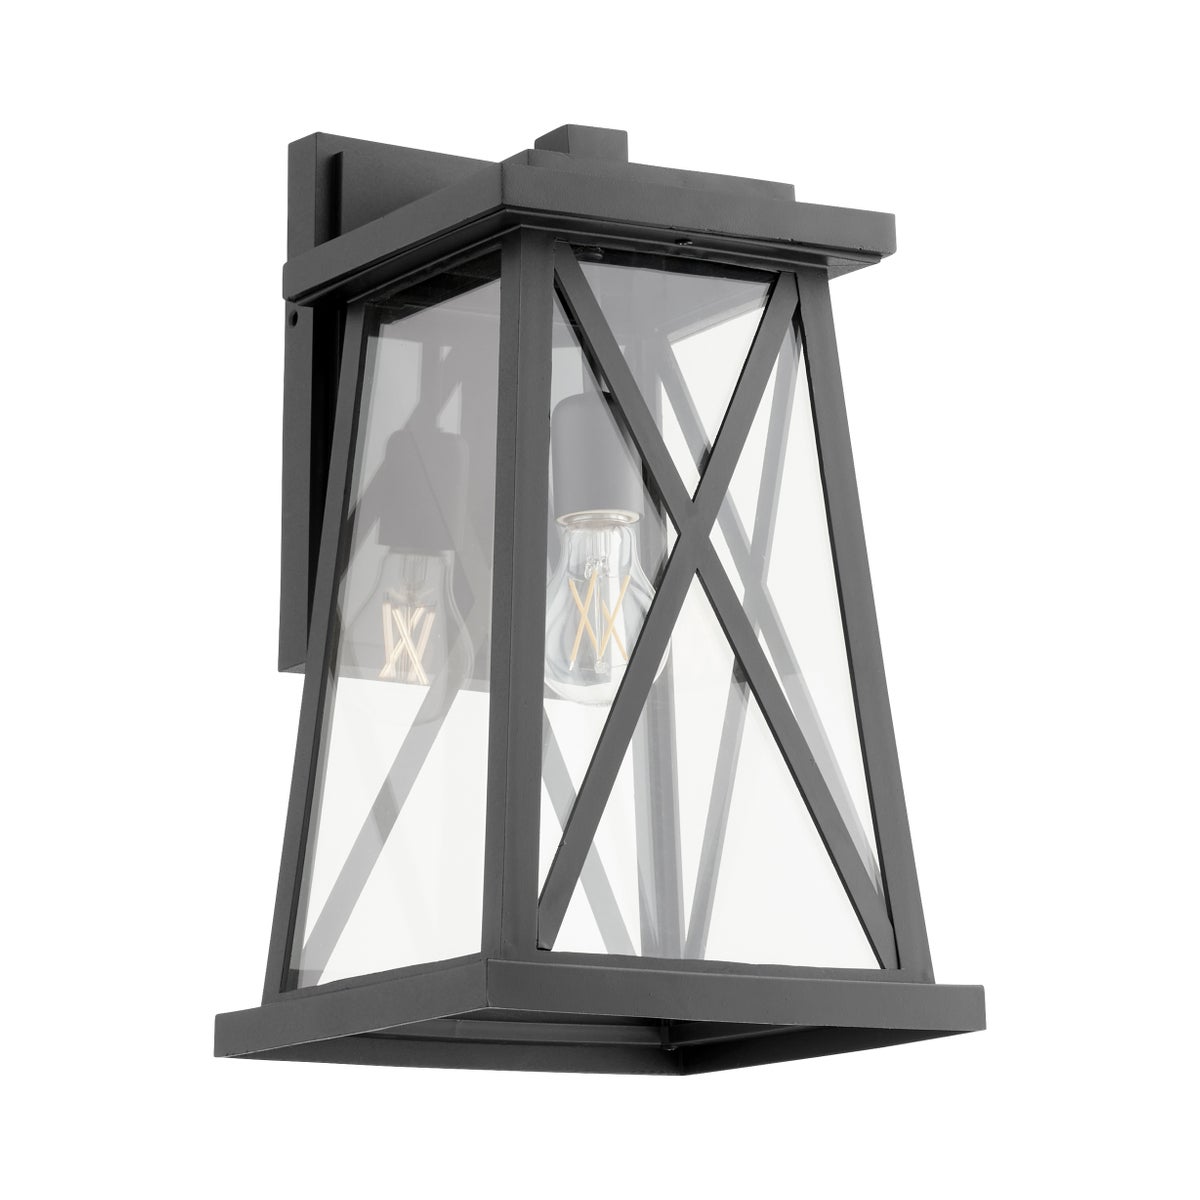 ARTESNO 16" Lantern - Textured Black